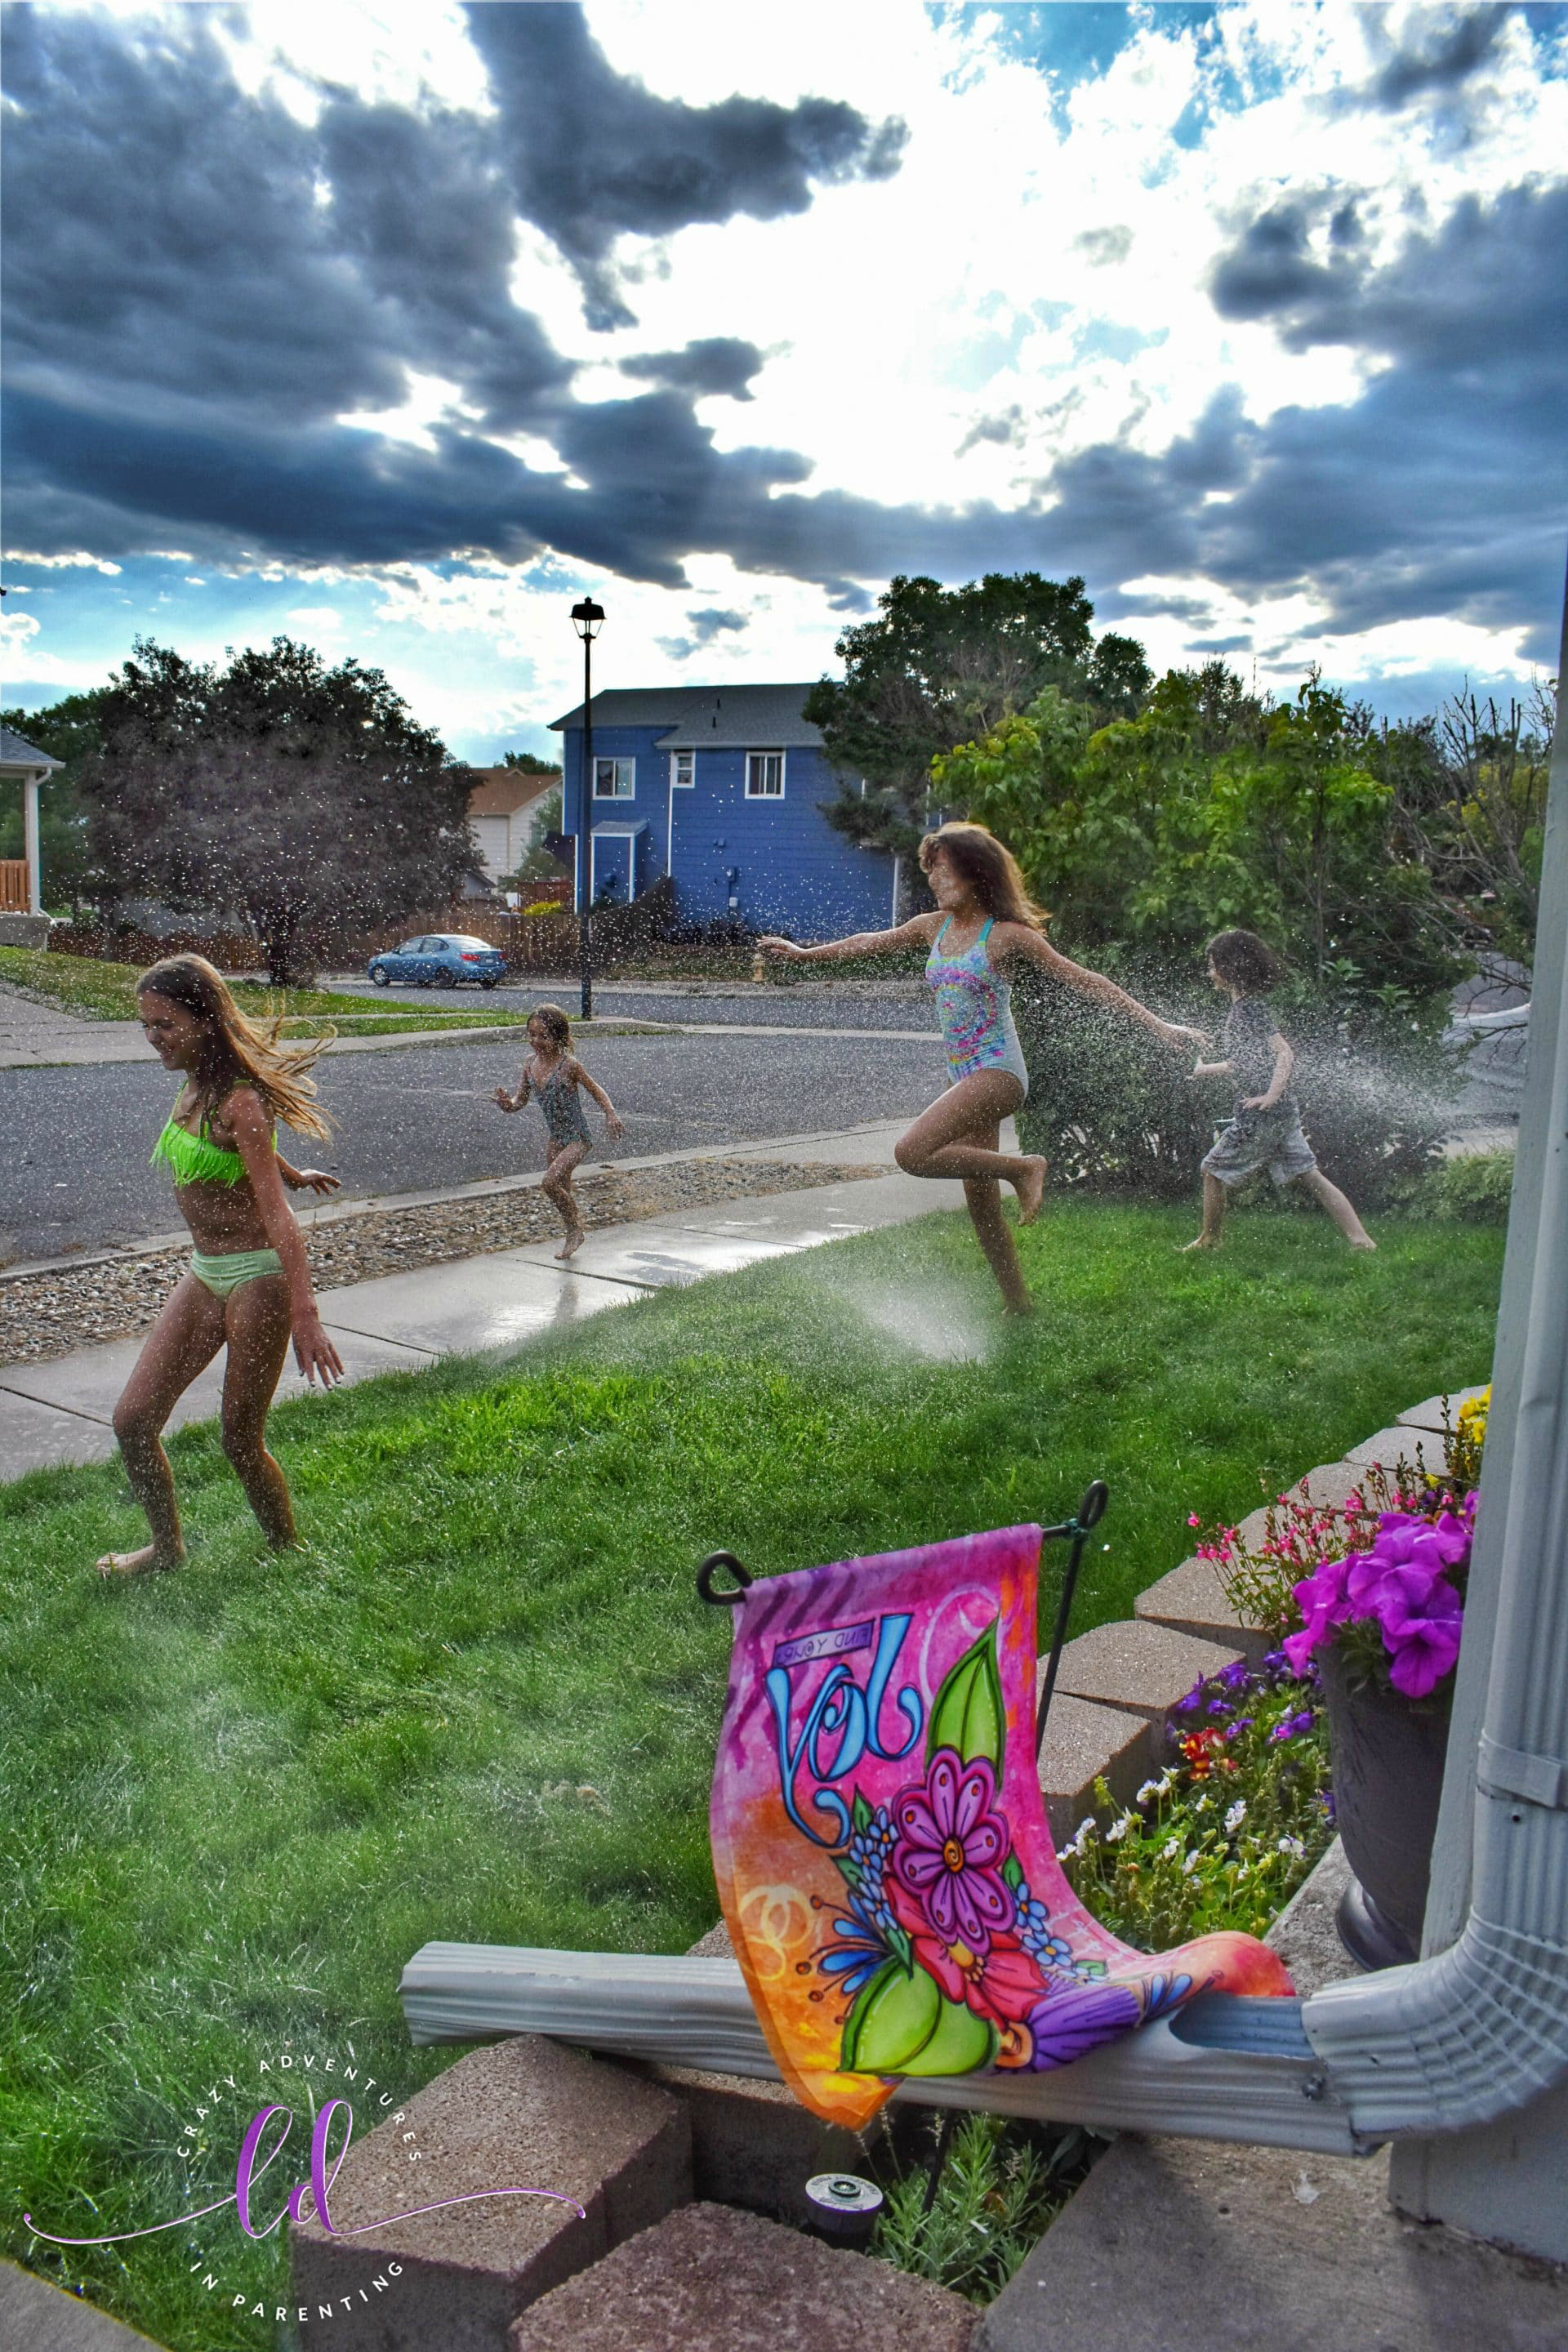 Sprinkler fun in the summertime